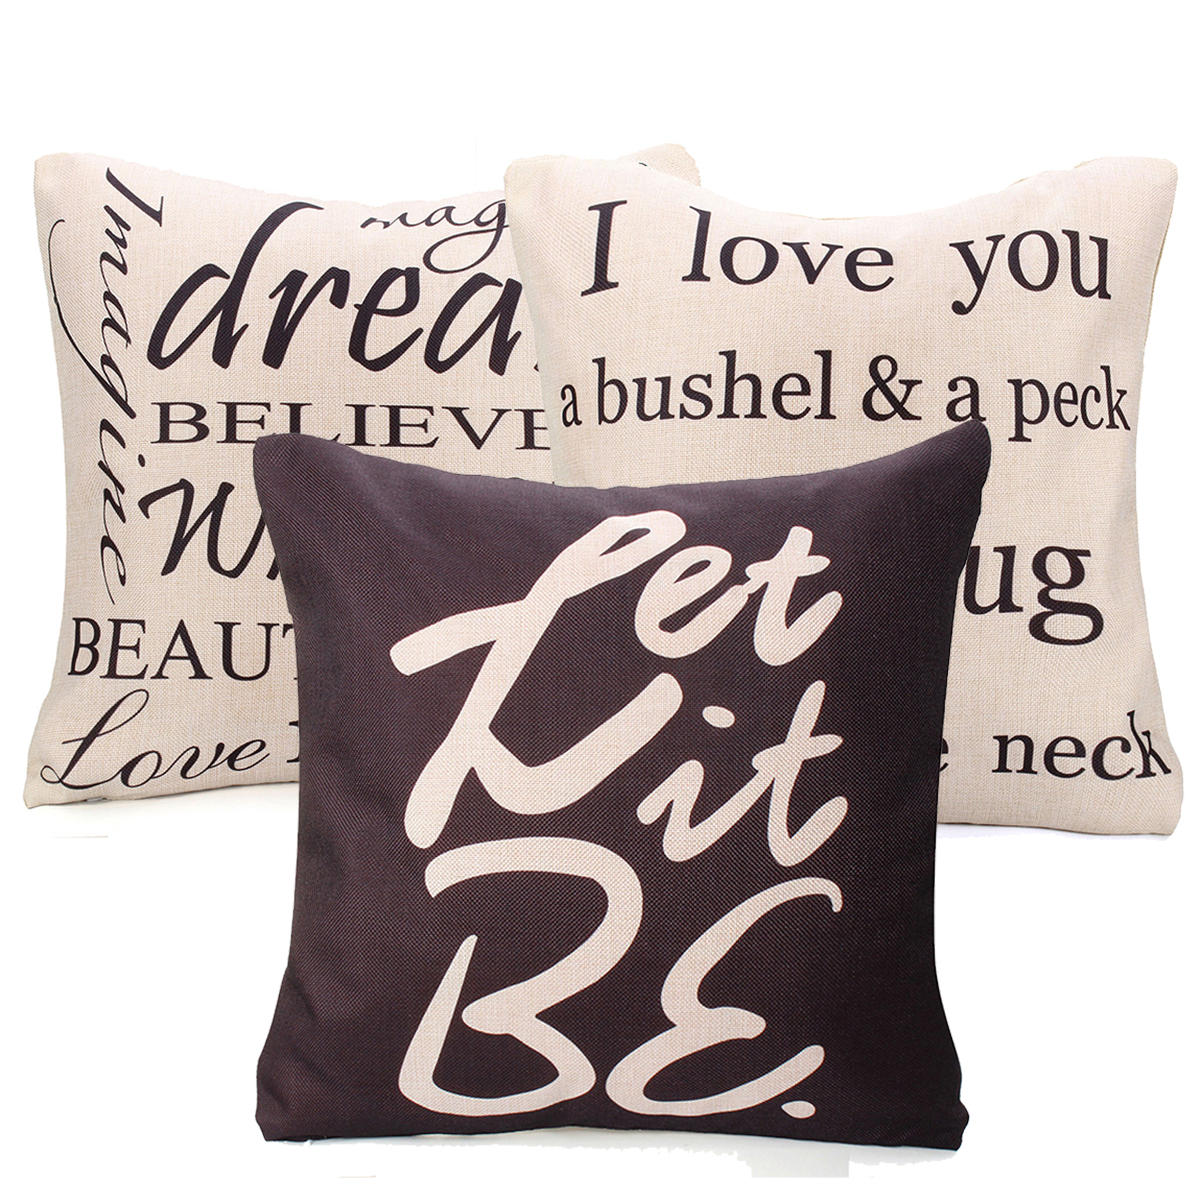 Square-English-Letter-Cotton-Linen-Pillow-Case-Throw-Cushion-Cover-Home-Decor-1053093-1